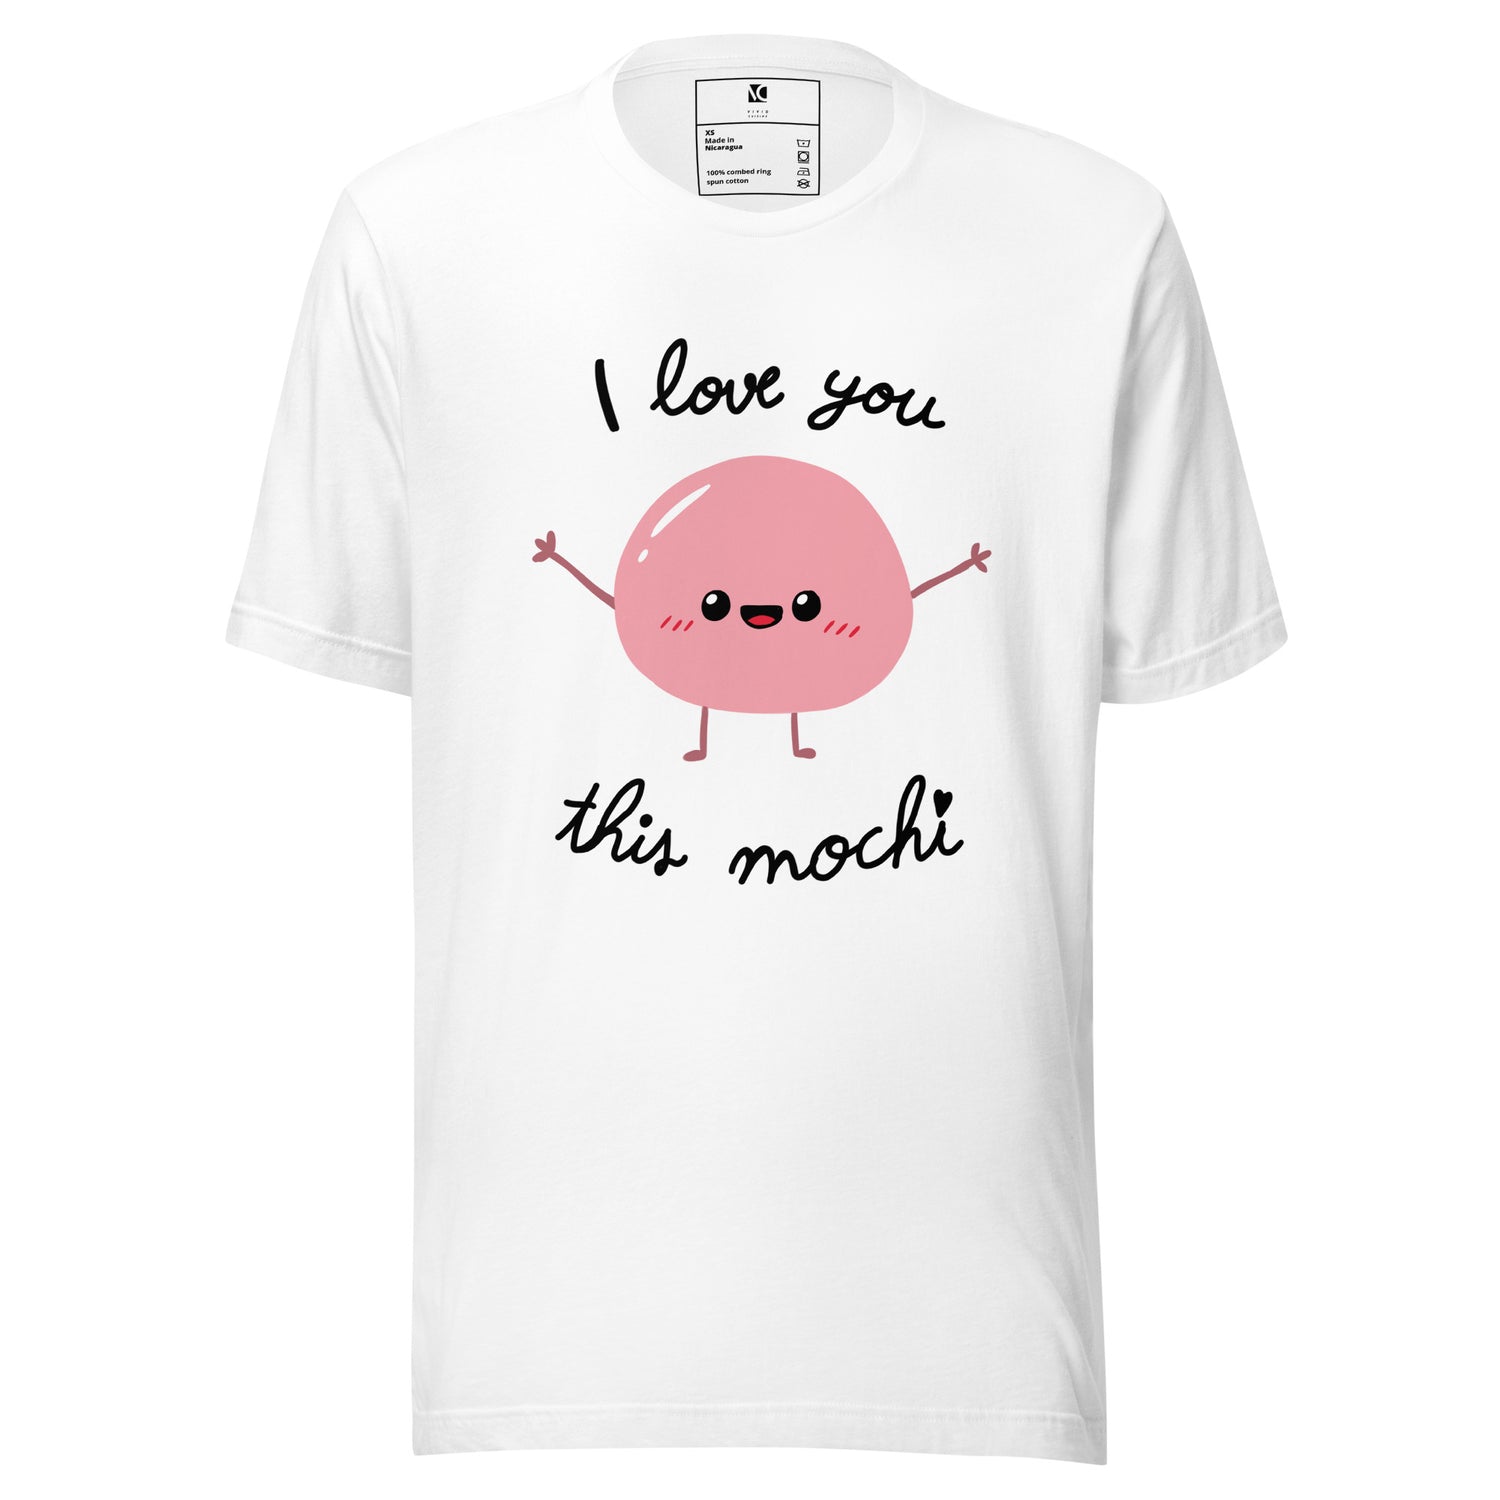 &quot;I love you this mochi!&quot; - Unisex T-Shirt